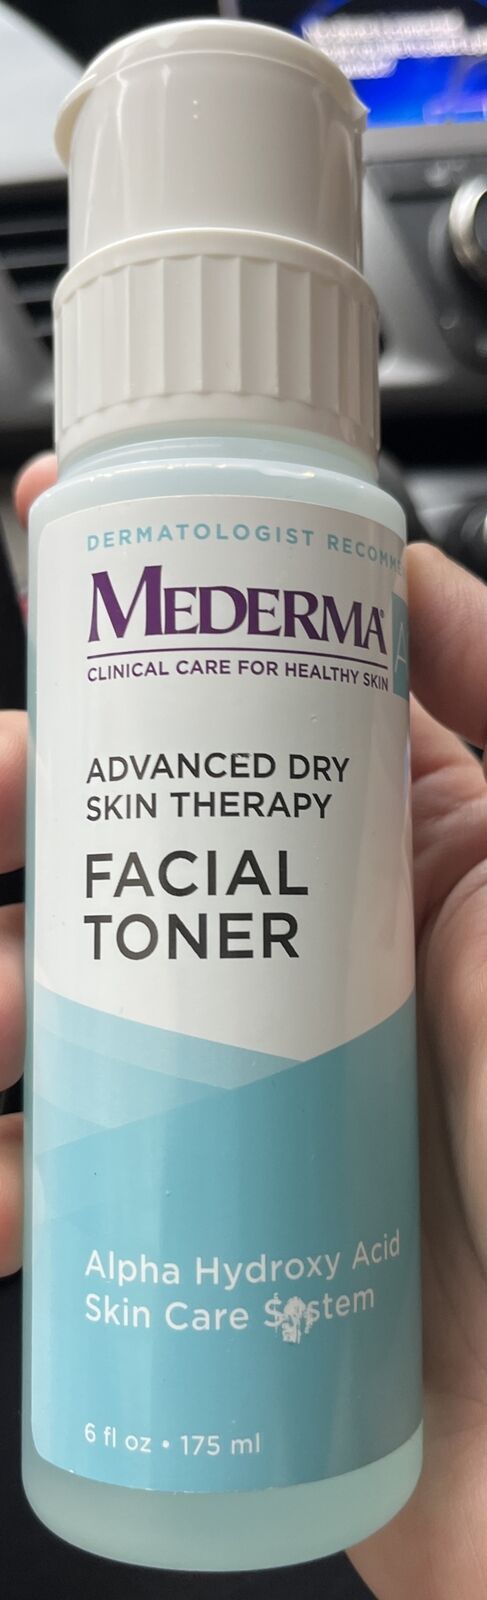 Mederma AG Facial TONER Advanced Dry Skin Therapy 6 Fl Oz